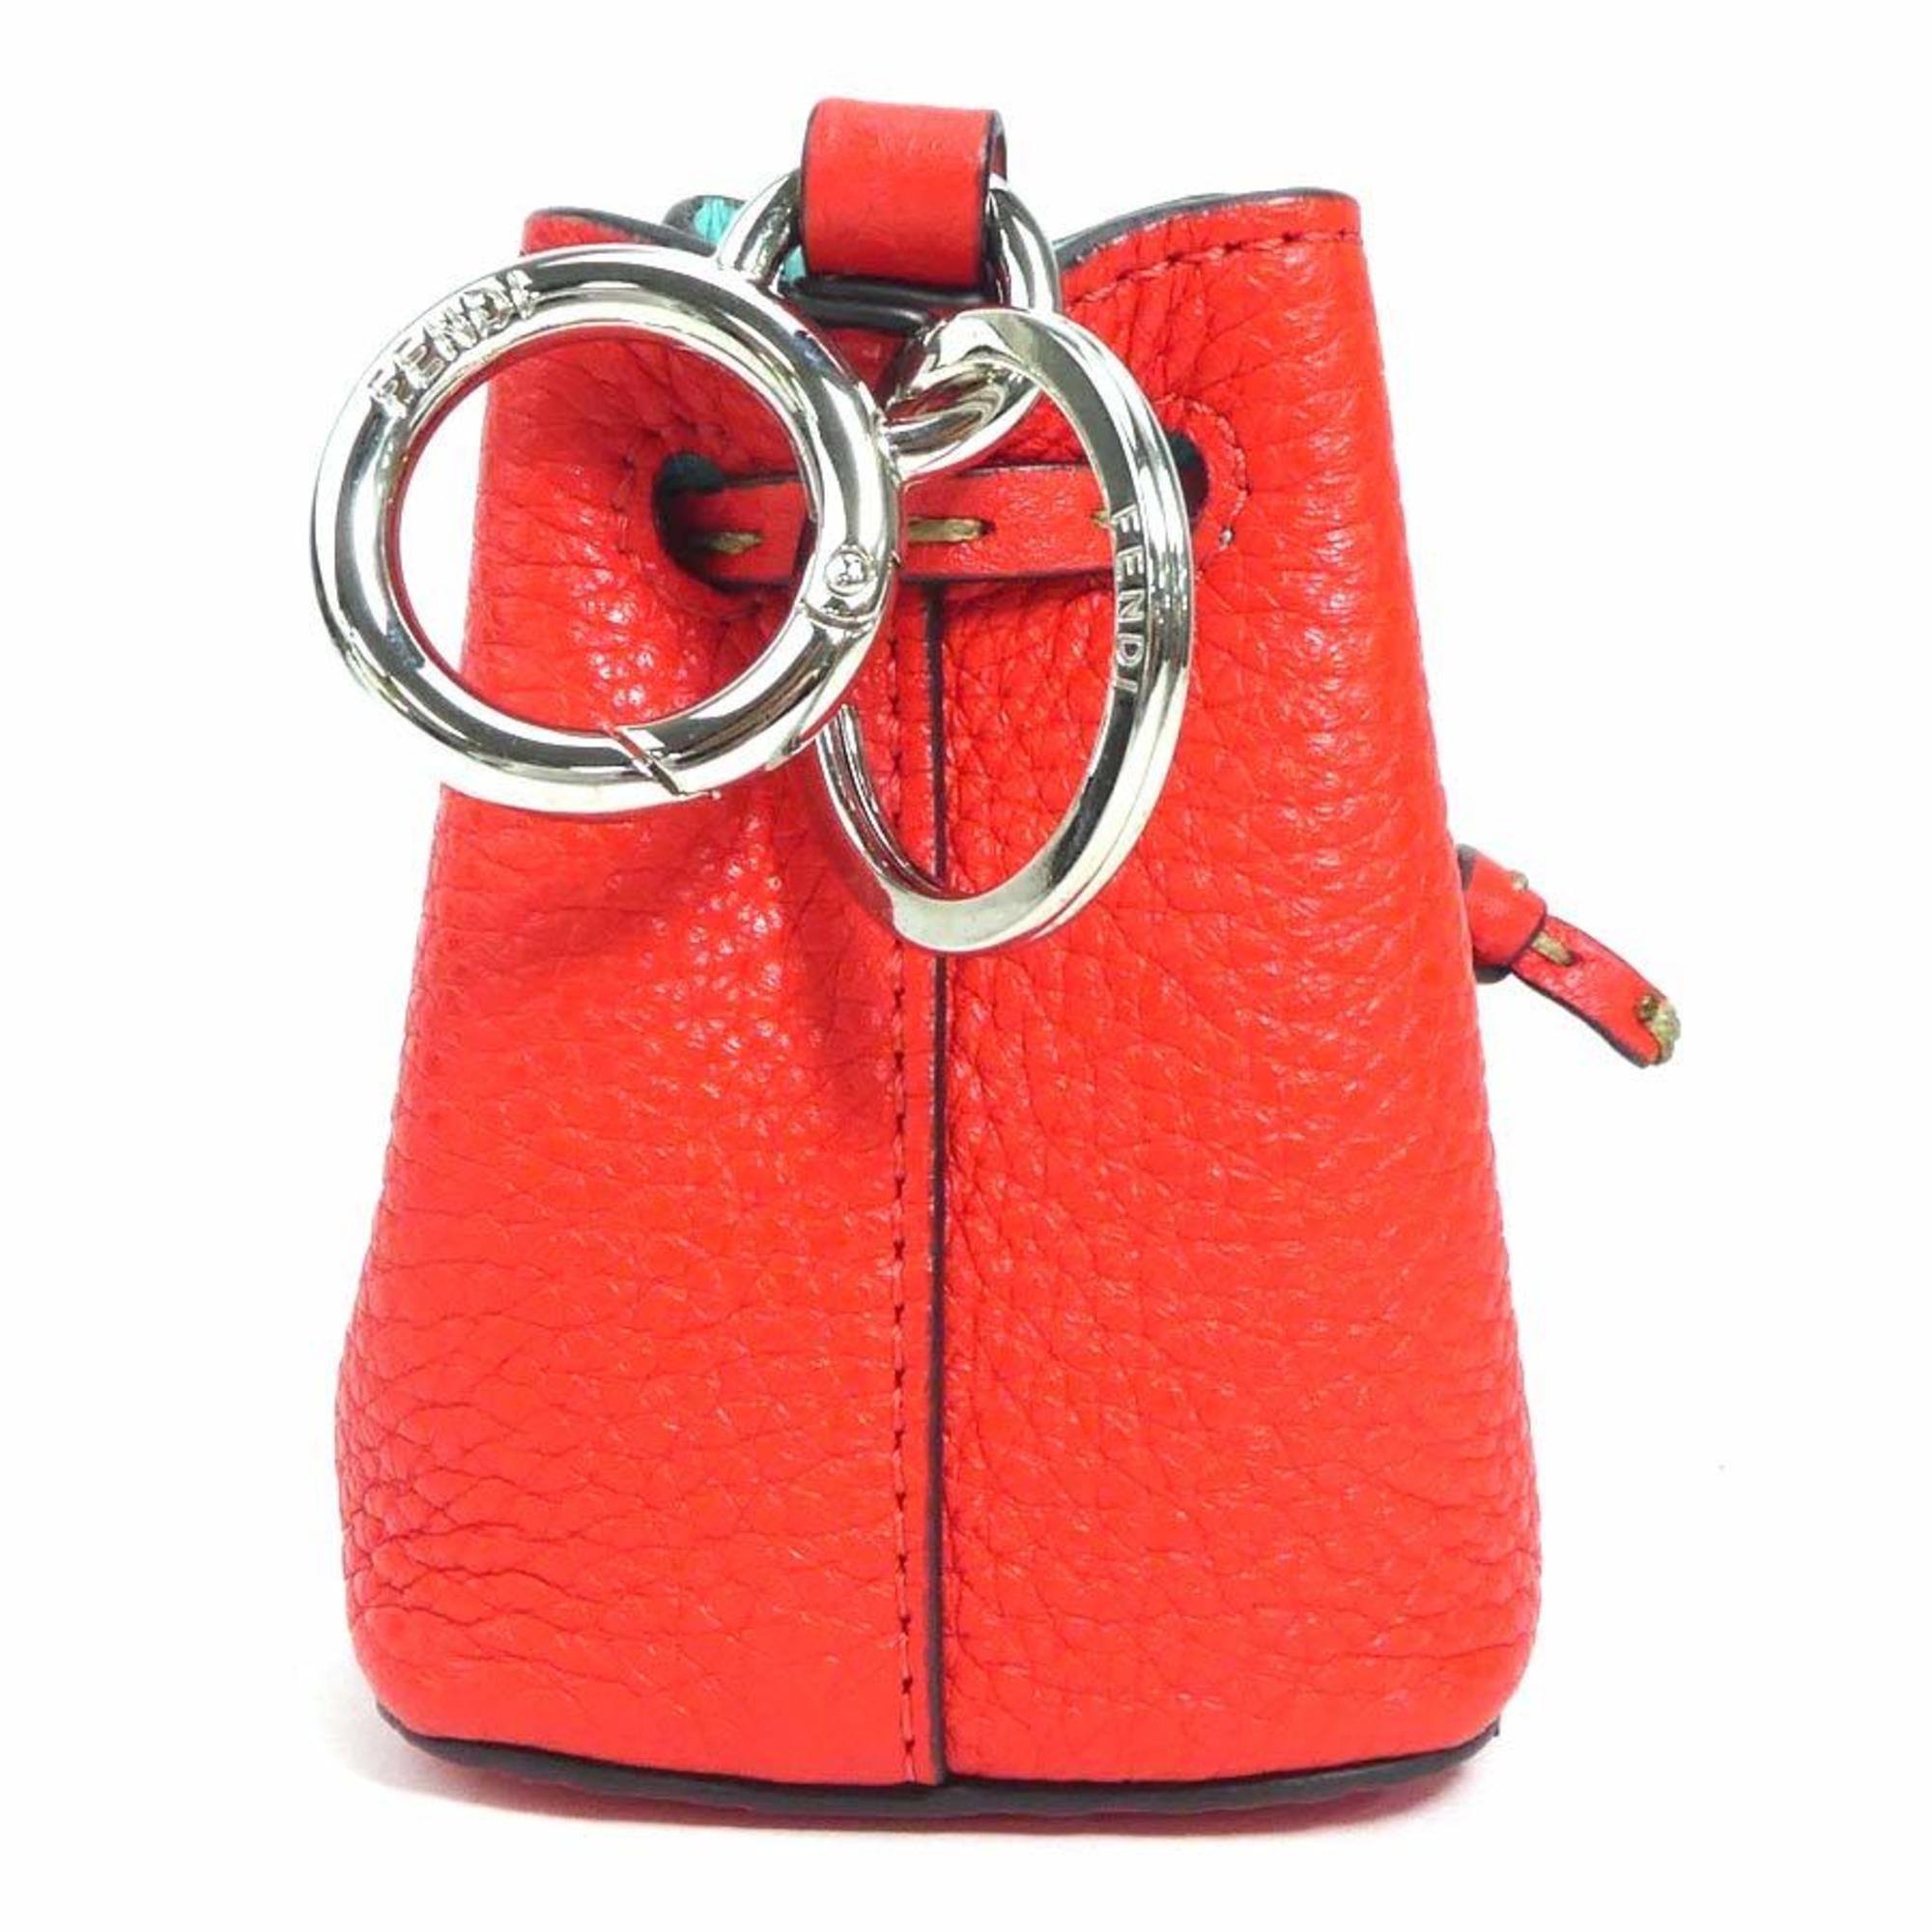 FENDI Charm Key Ring Leather/Metal Orange Red/Silver Ladies